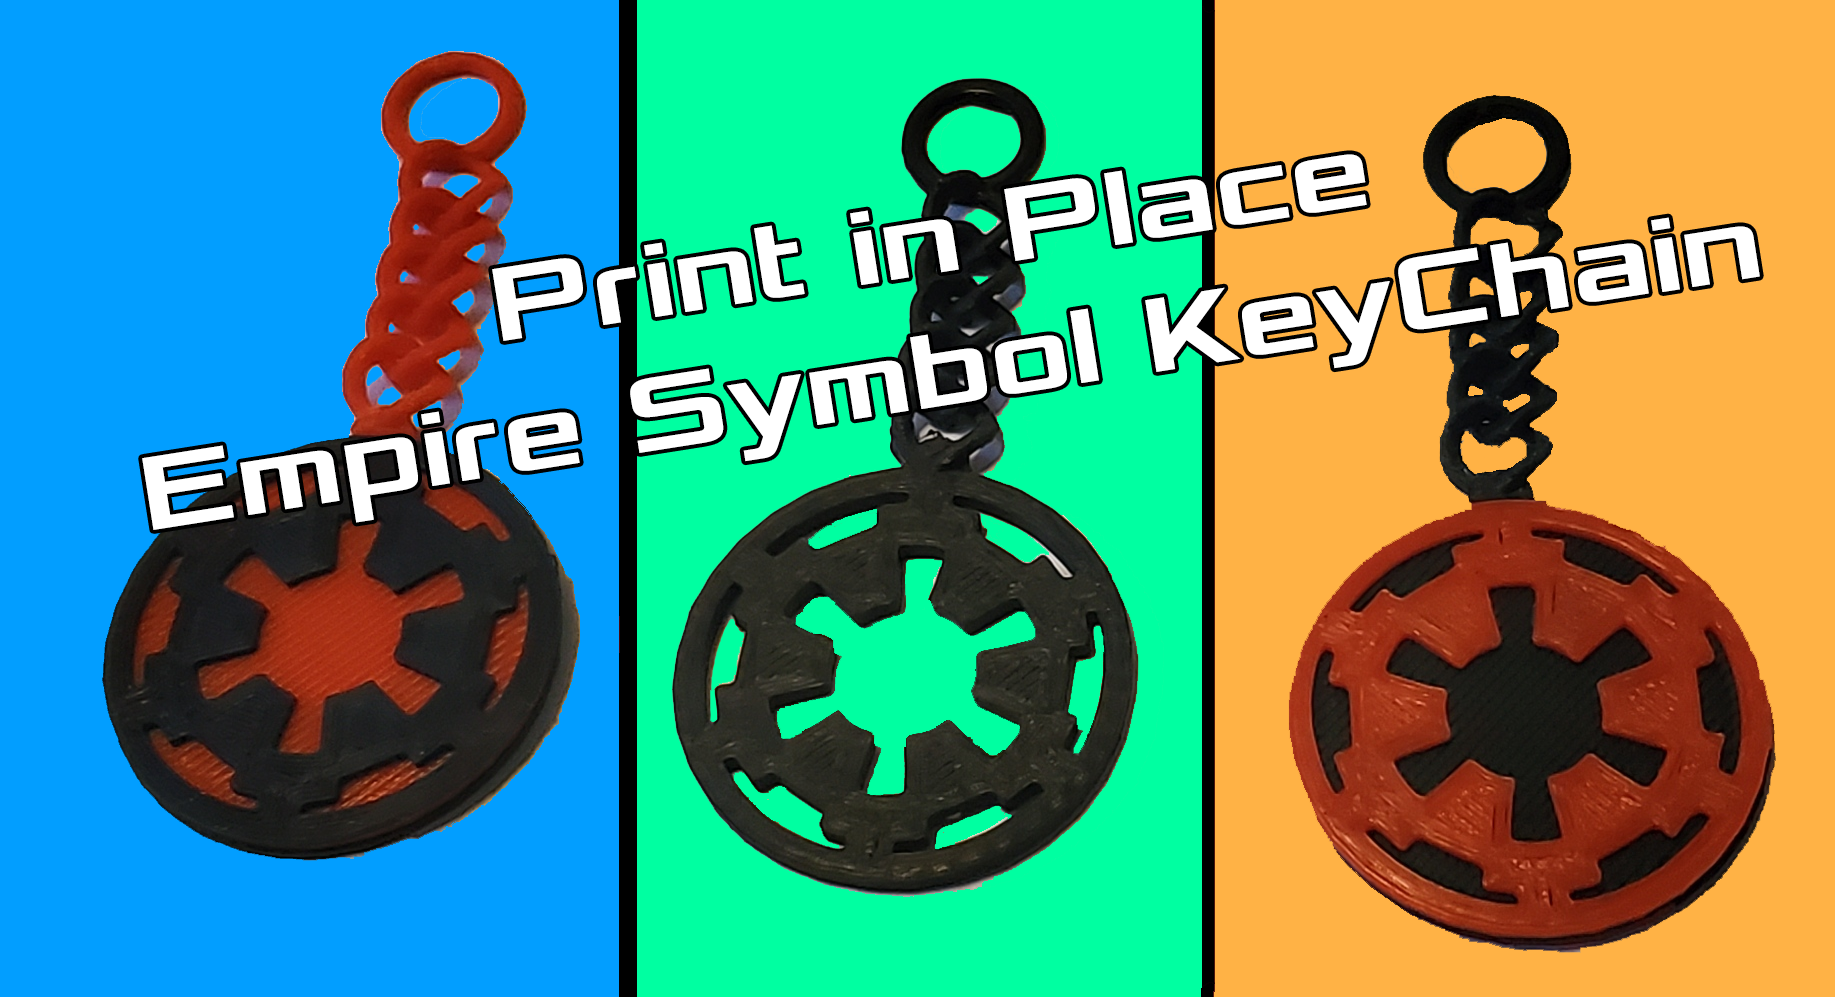 Empire Symbol Keychain